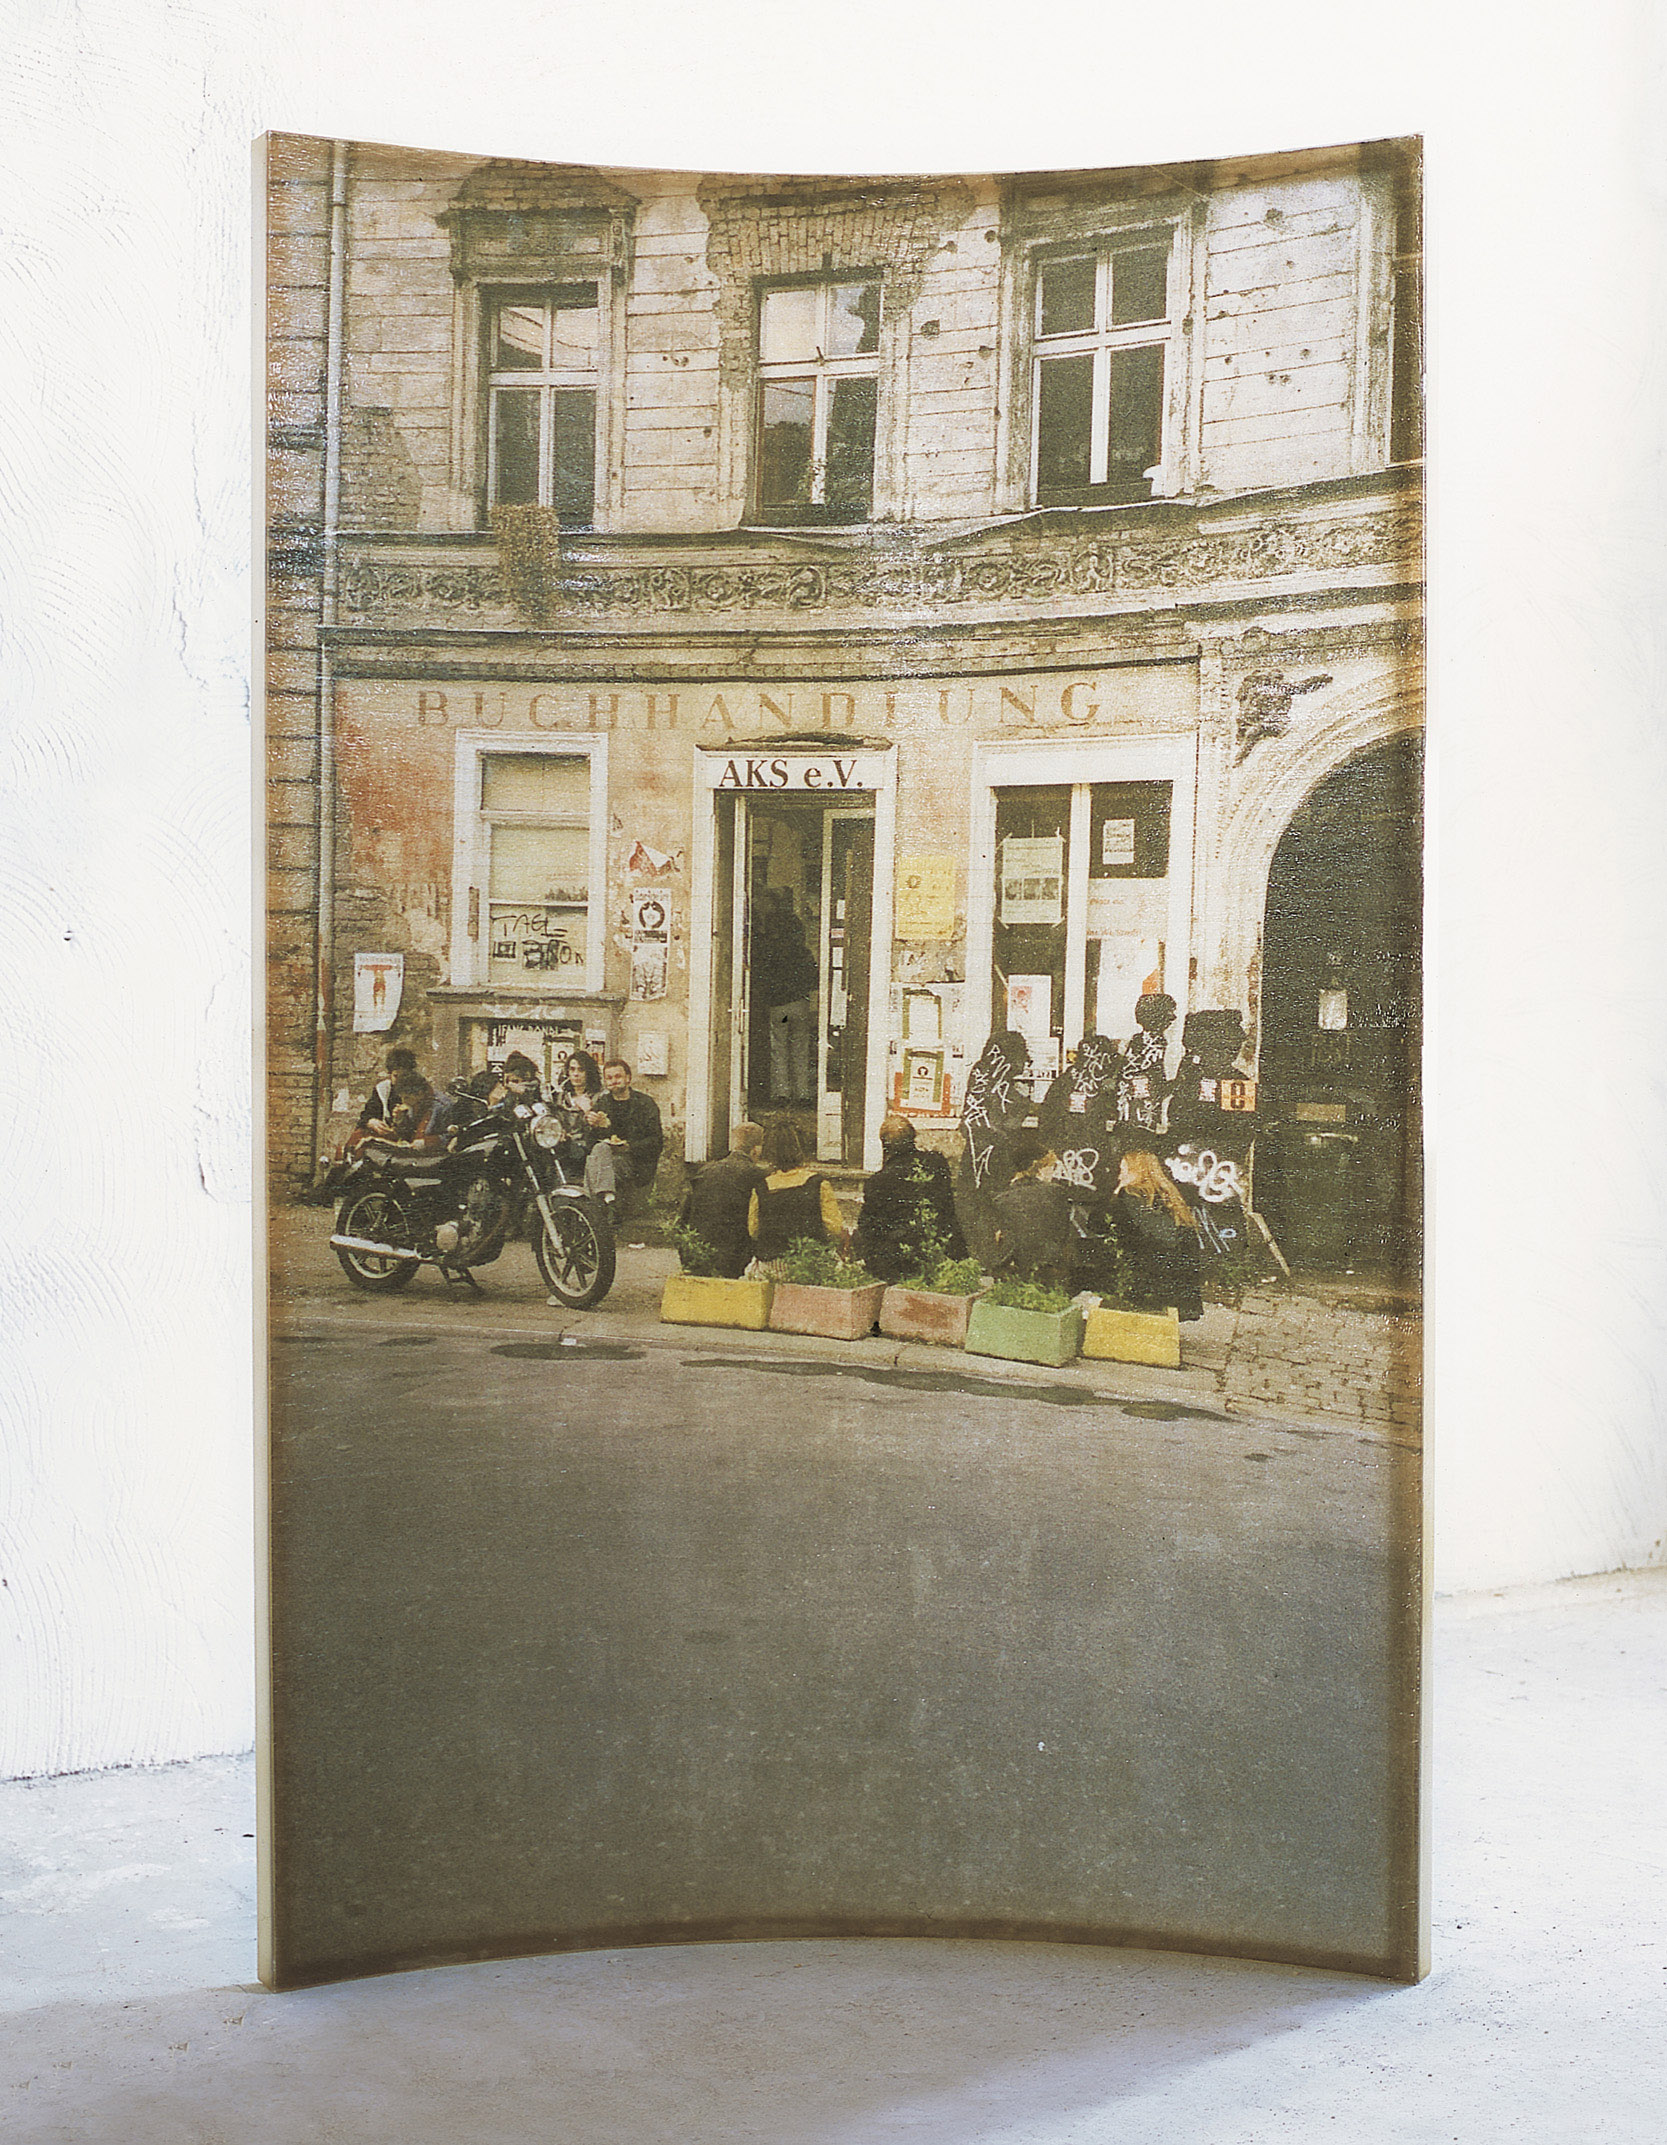 Amador. Lhome i la ciutat, 2000, polyester resin and fotography, 240 x 163 x 35 cm.